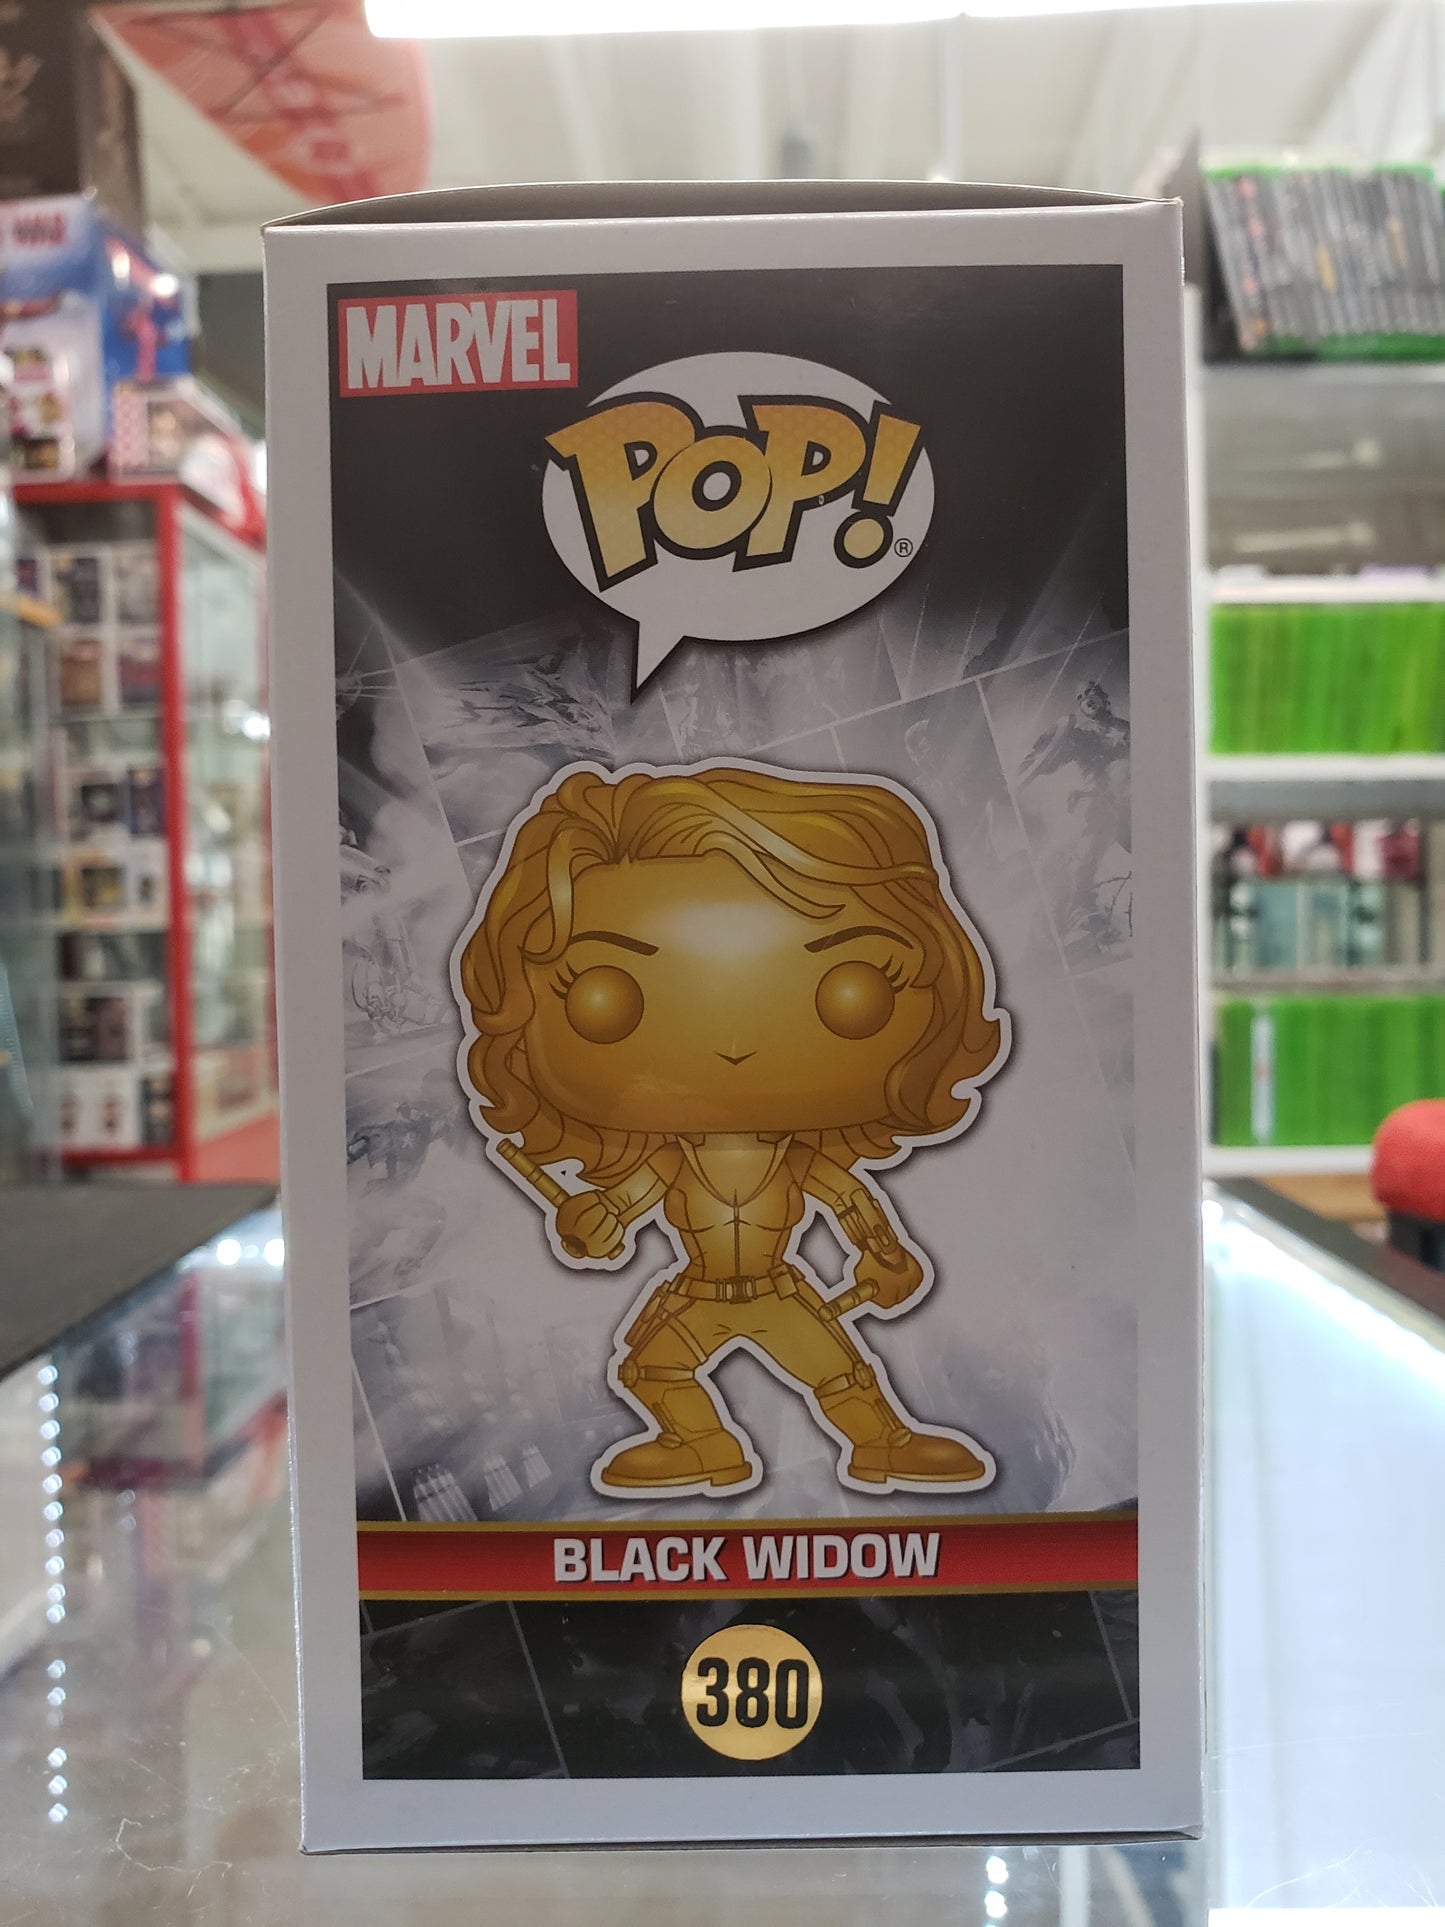 Funko Pop! Marvel Studios The First Ten Years: Black Widow